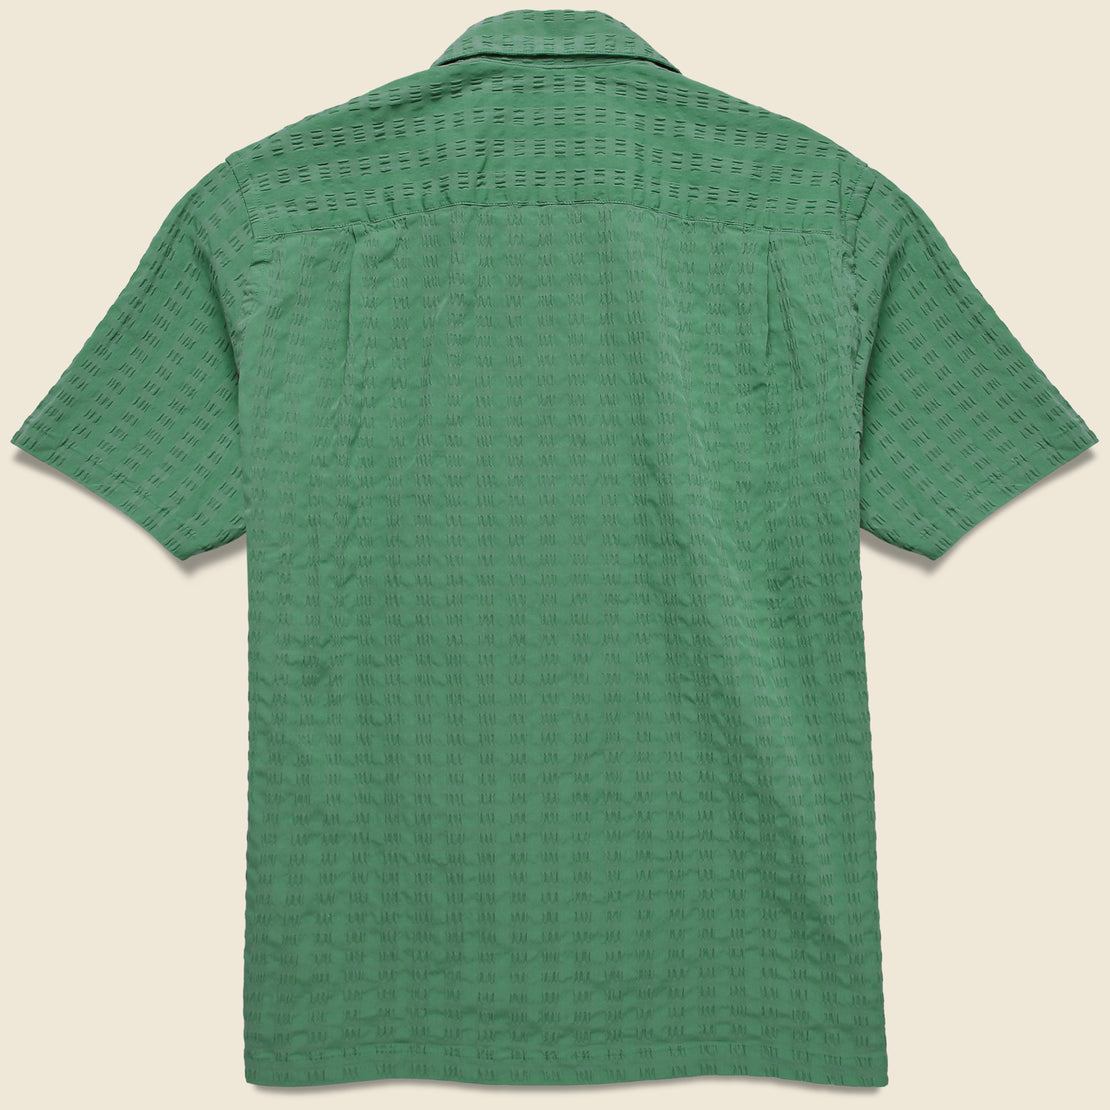 Big Square Seersucker Shirt - Green - Portuguese Flannel - STAG Provisions - Tops - S/S Woven - Seersucker